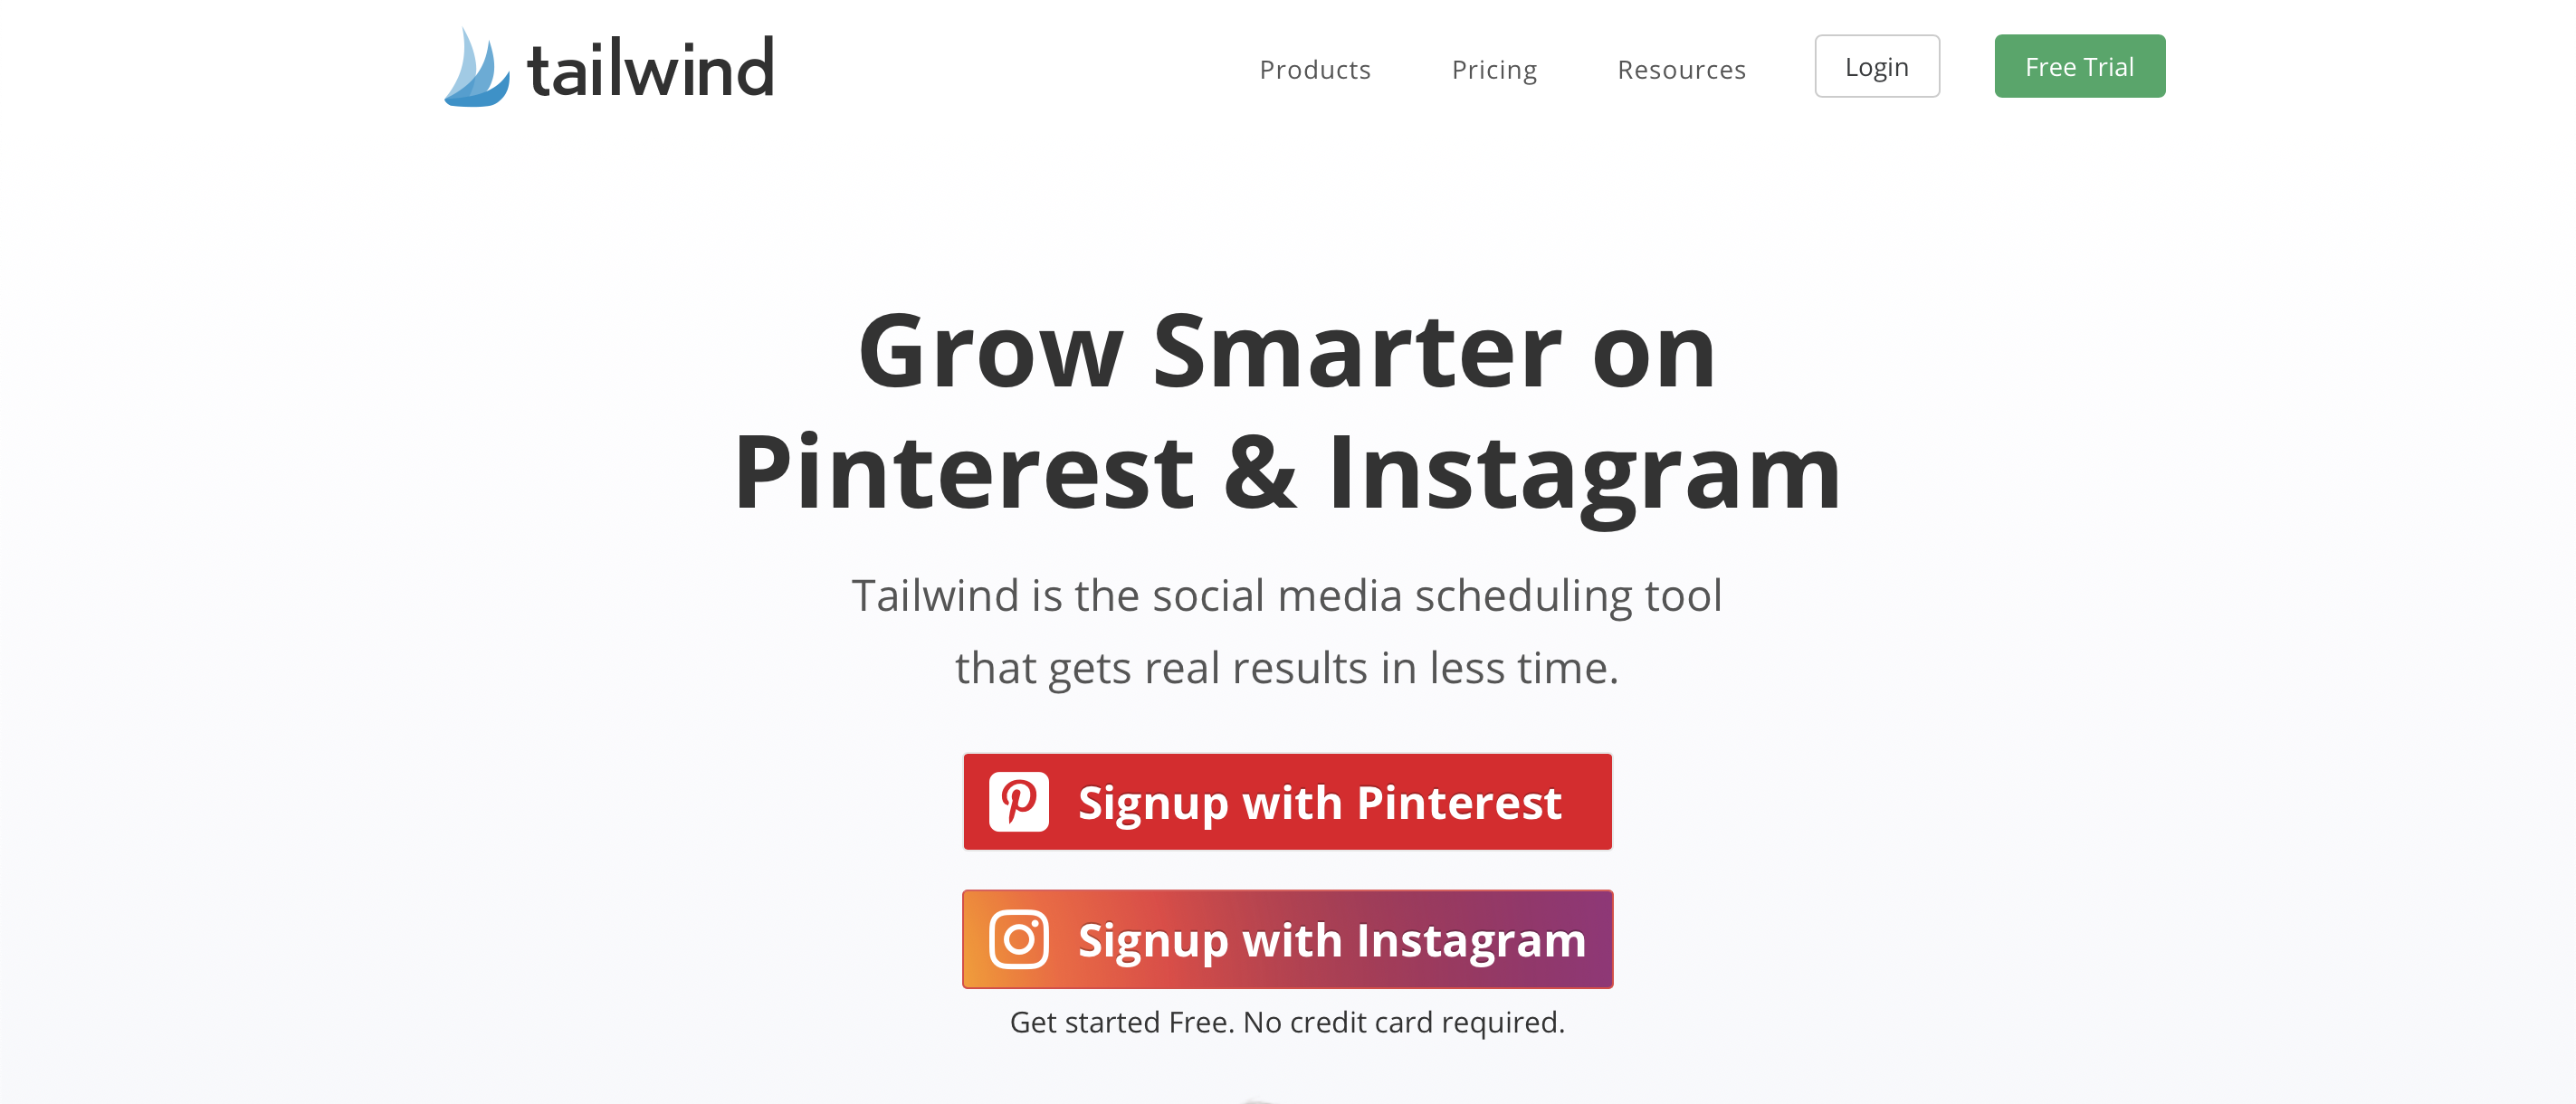 Pinterest Marketing Tips & Tools: Tailwind